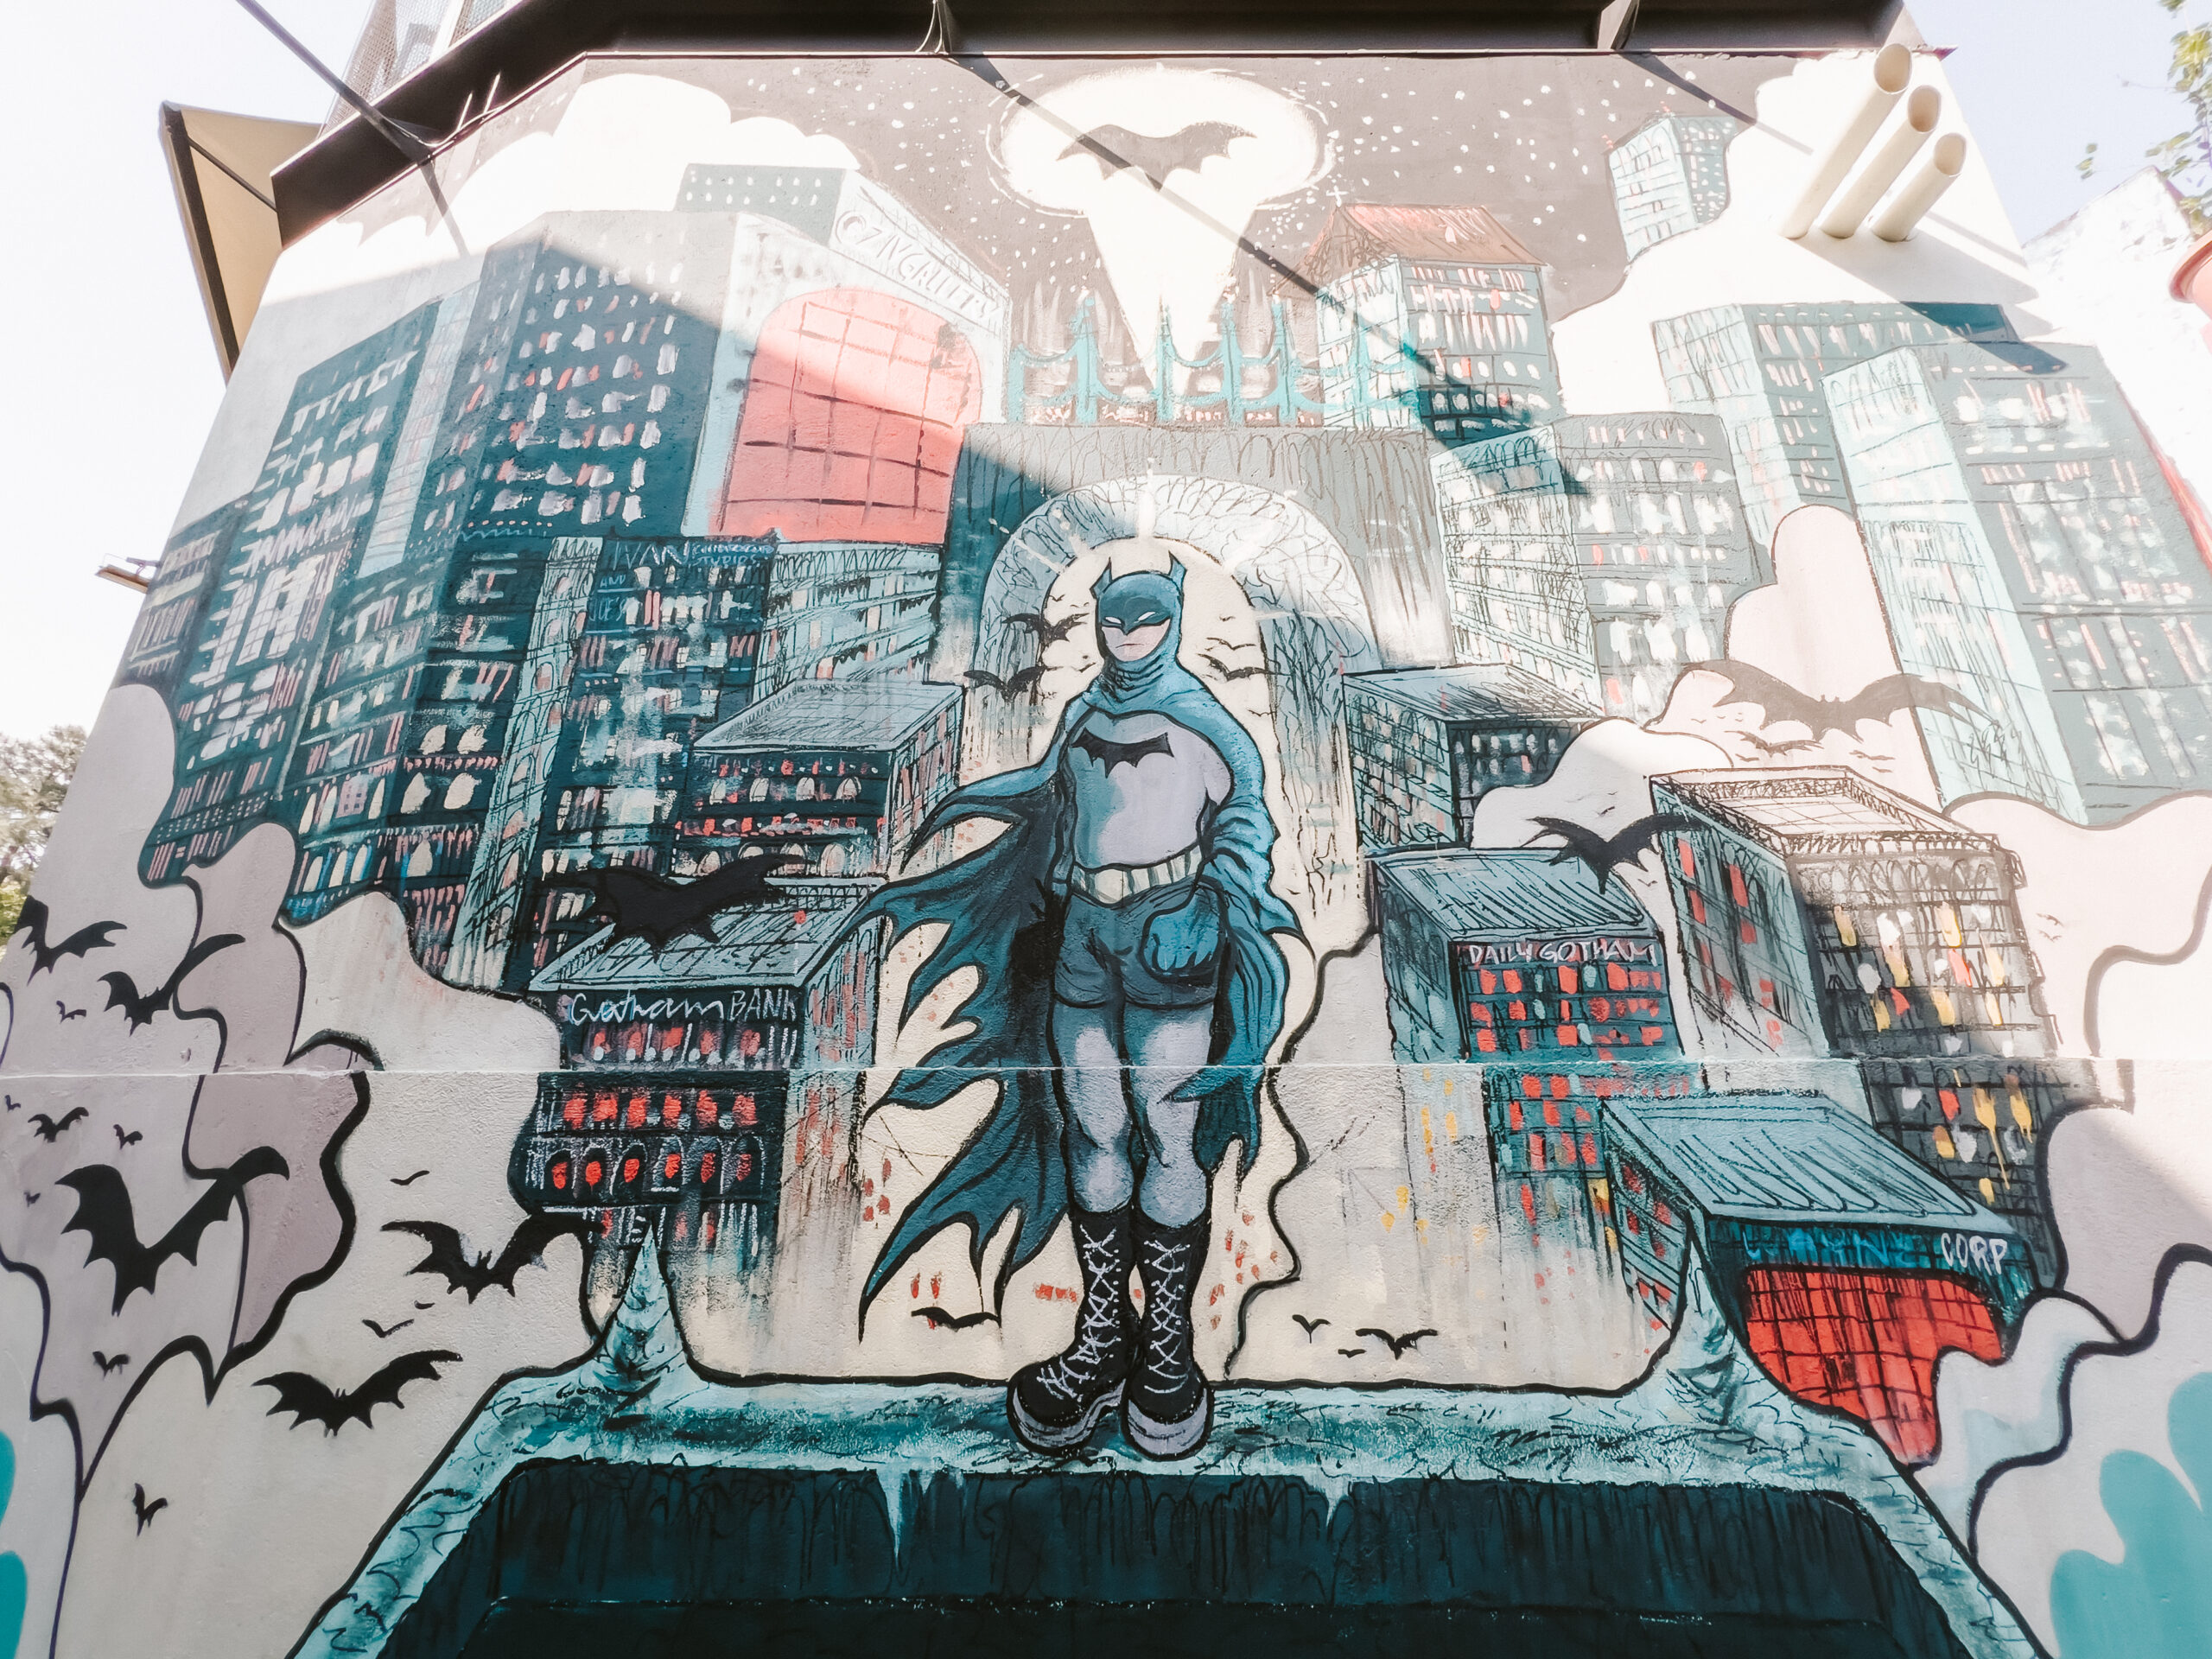 Beco do Batman (Batman Alley), São Paulo's urban art gallery